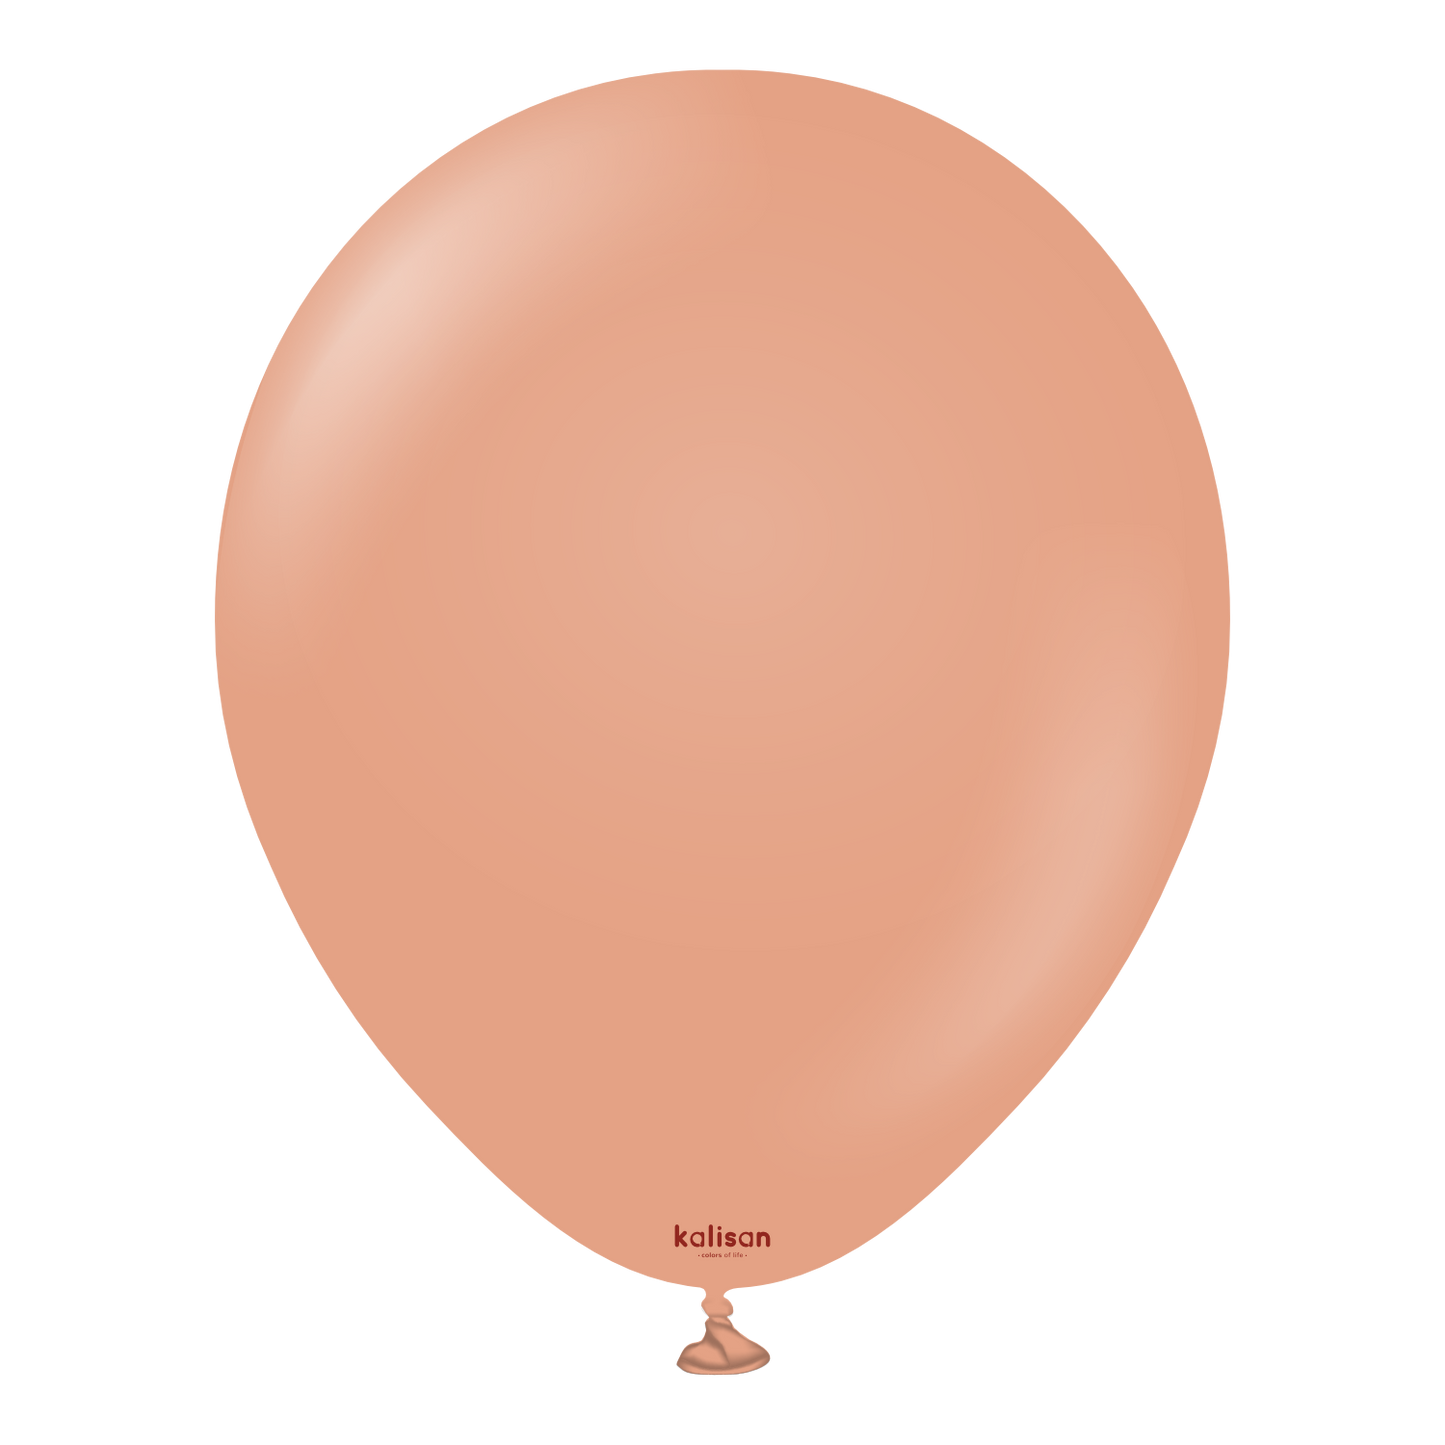 Premium lateksballong Kalisan i leirrosa farge